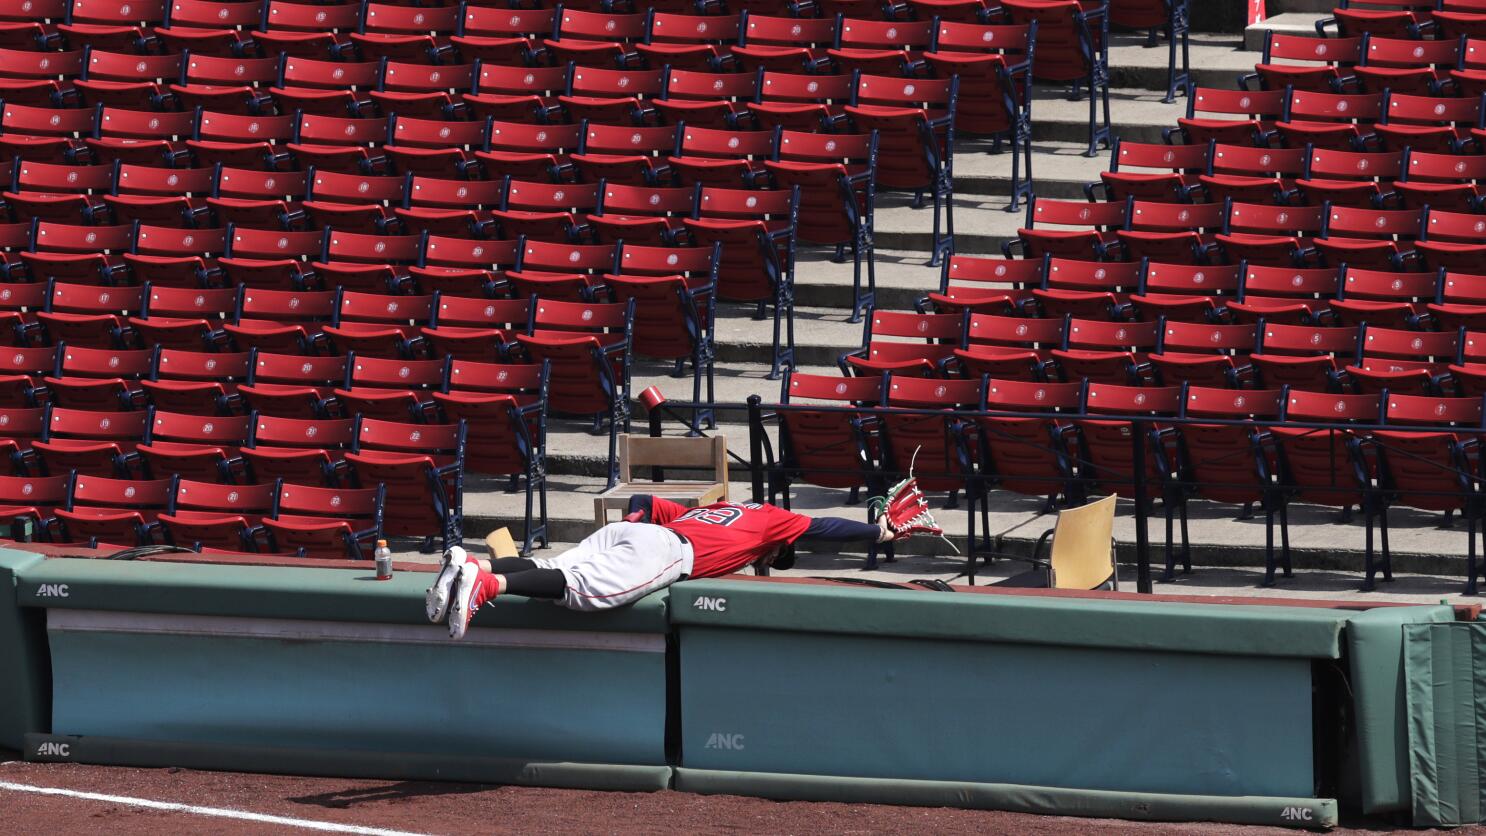 Former Red Sox catcher Jason Varitek recovering from COVID-19